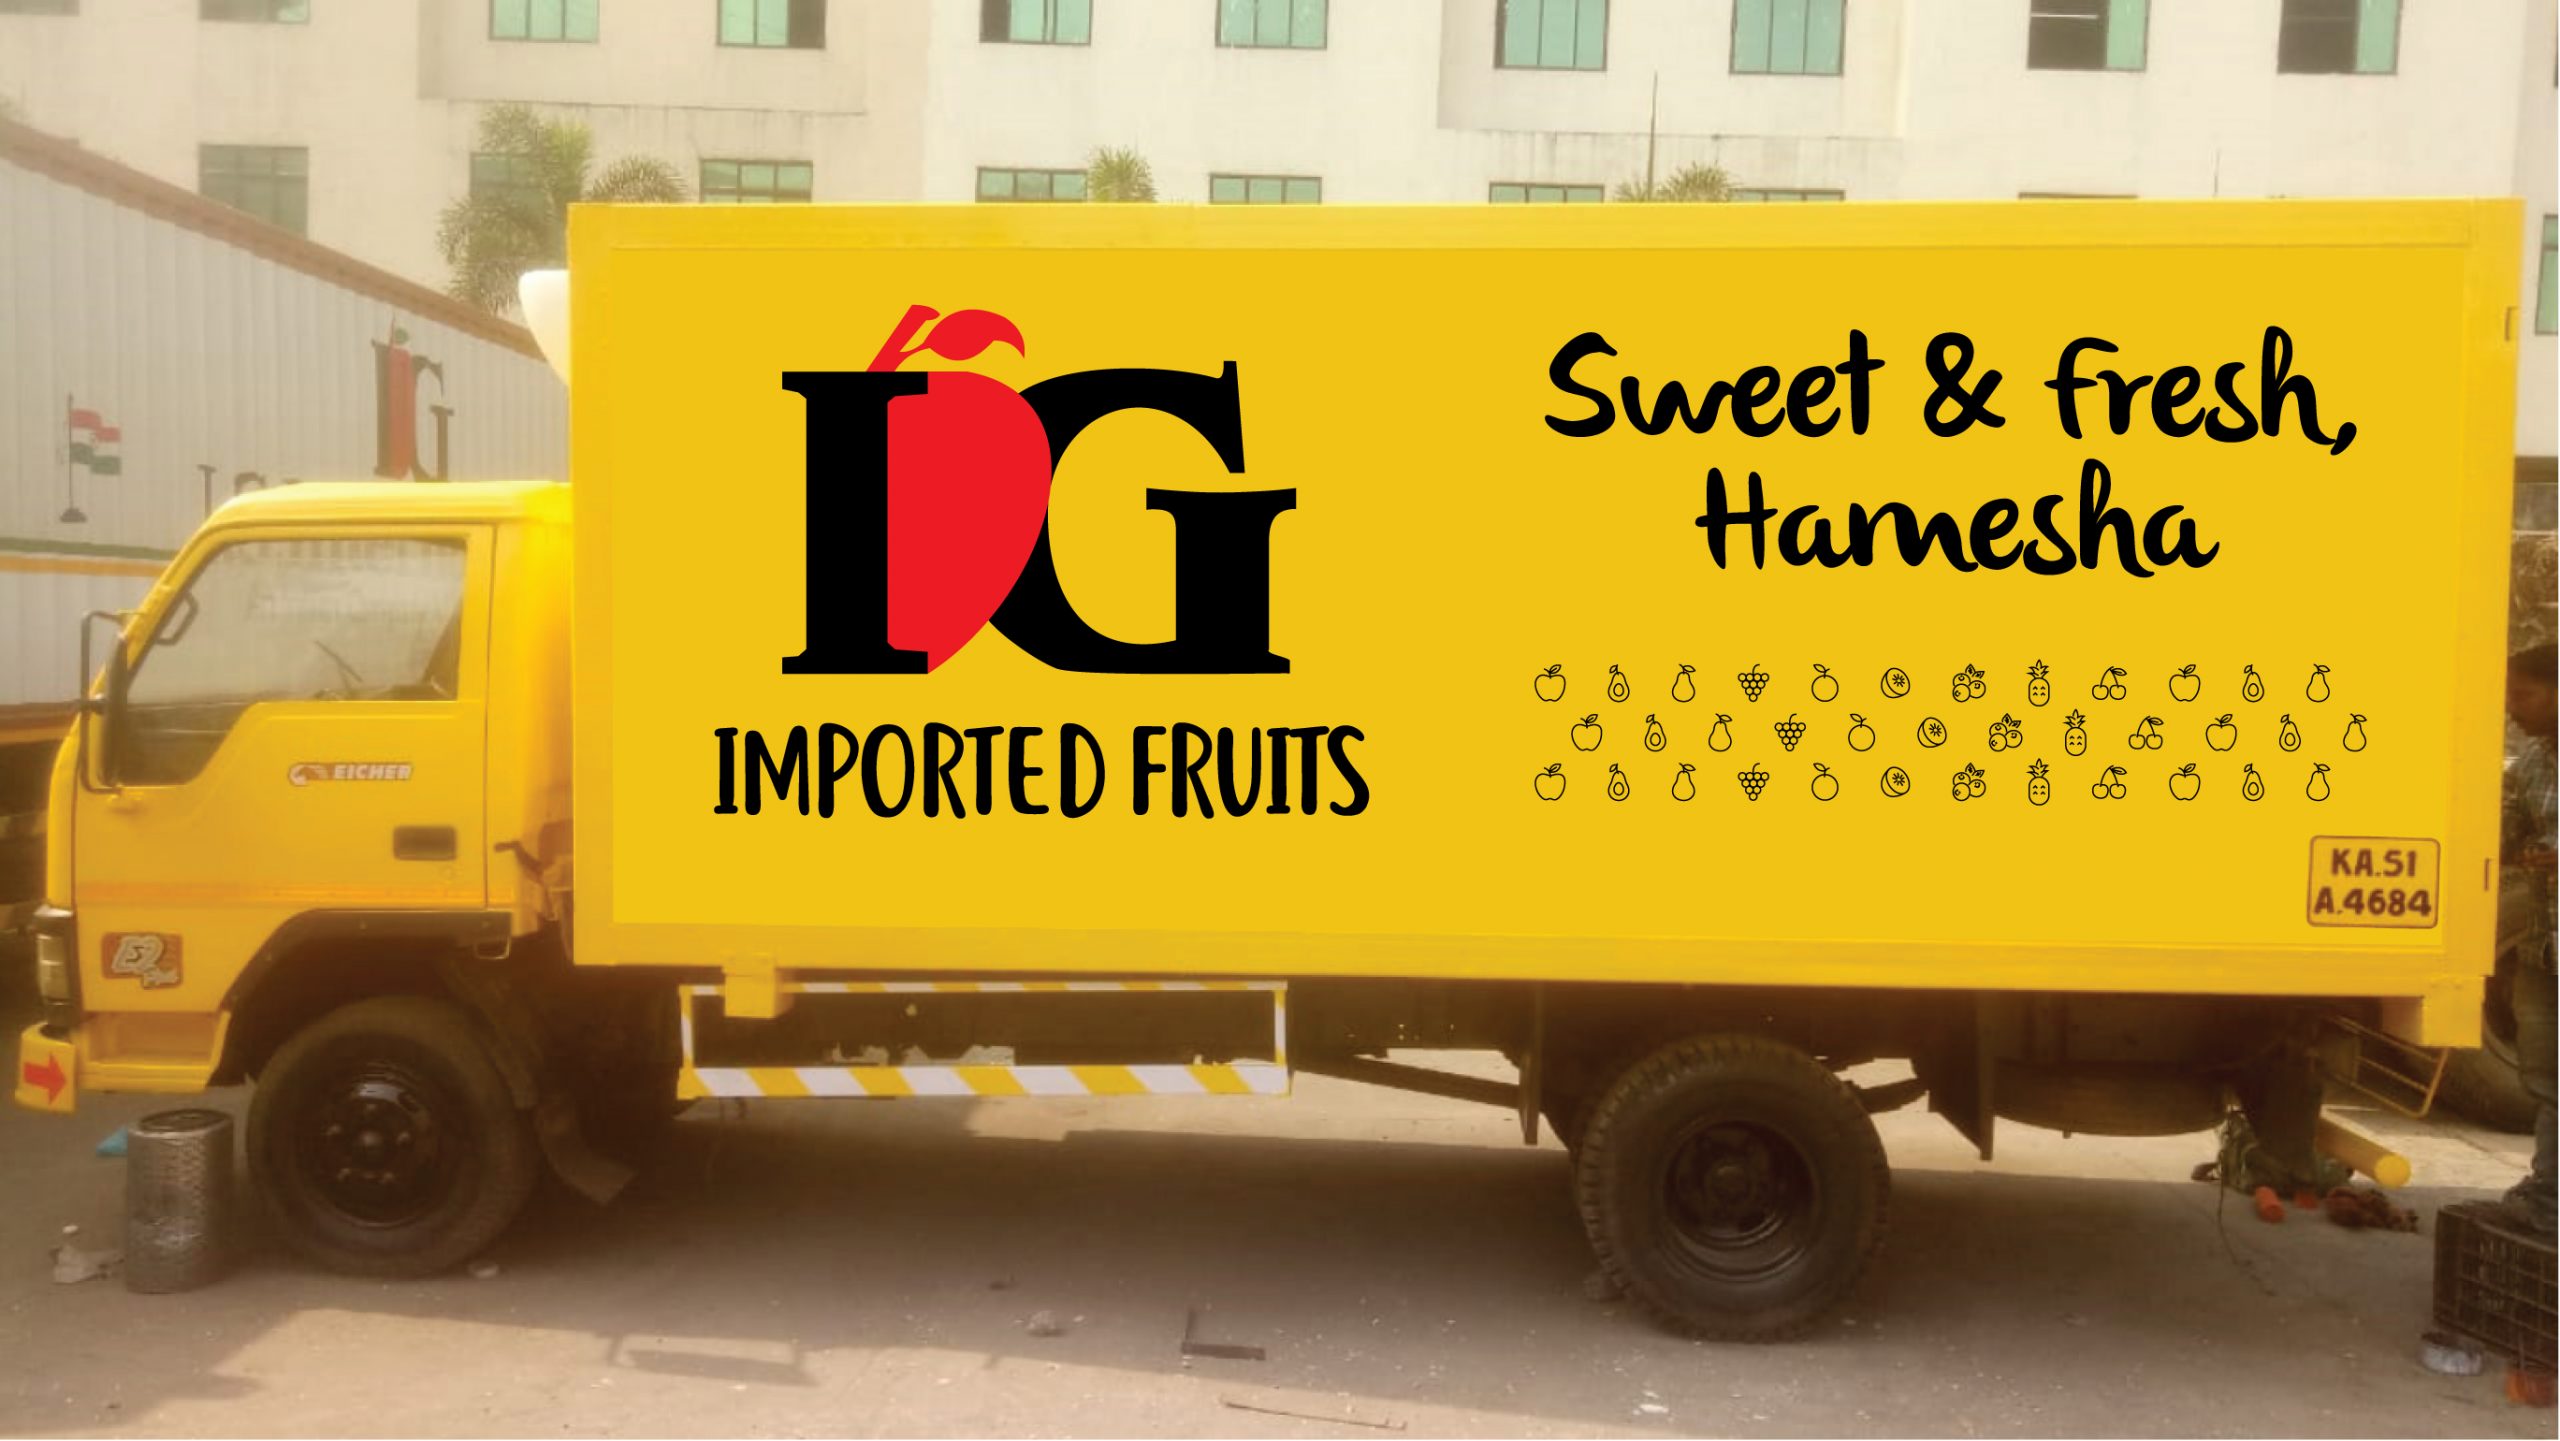 IG International's truck